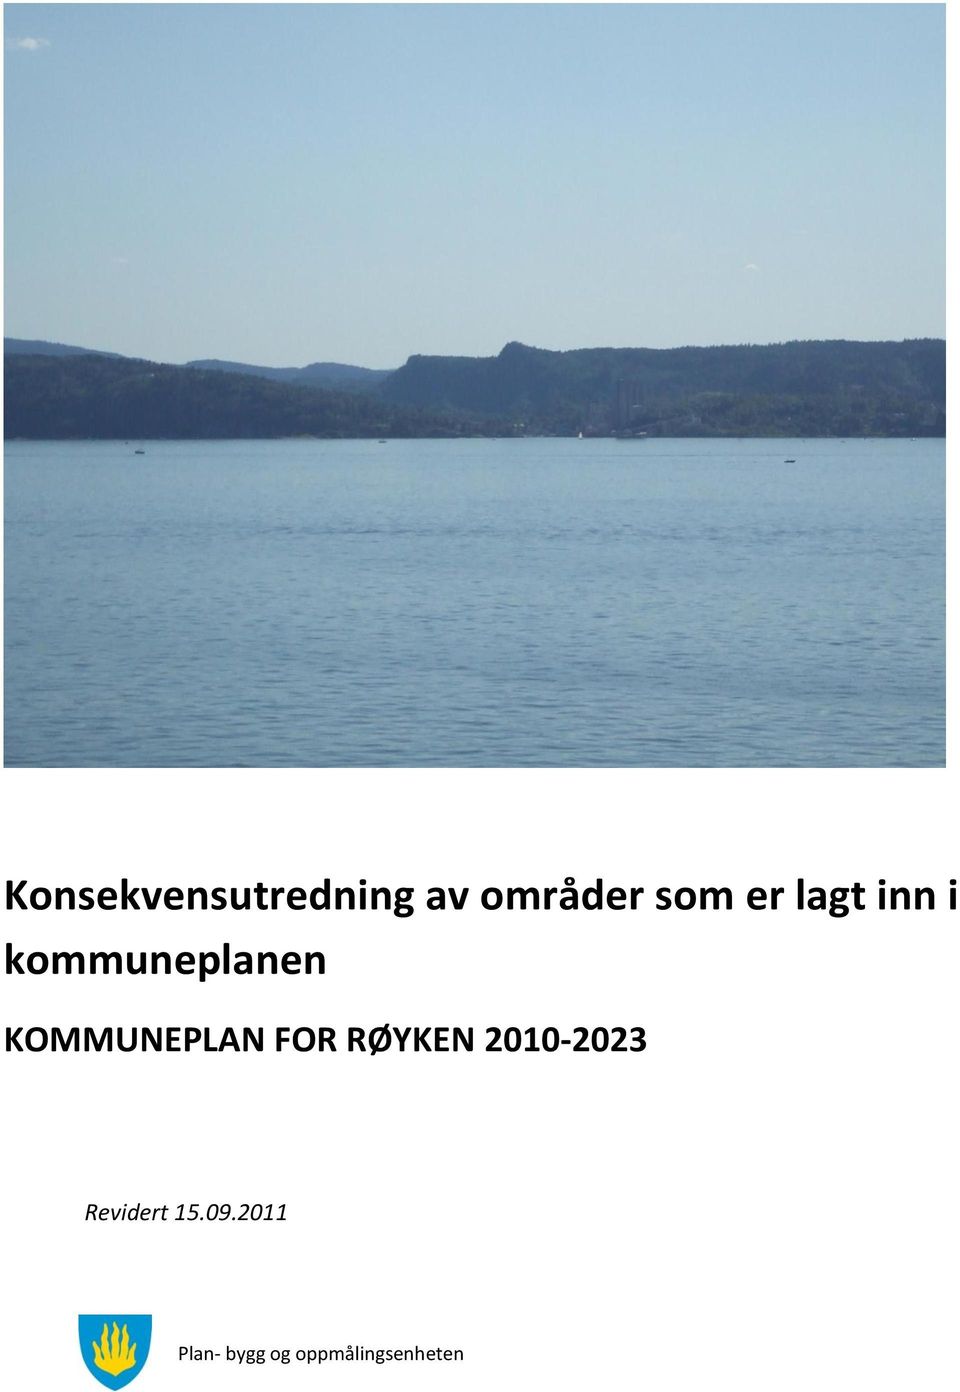 KOMMUNEPLAN FOR RØYKEN 2010-2023